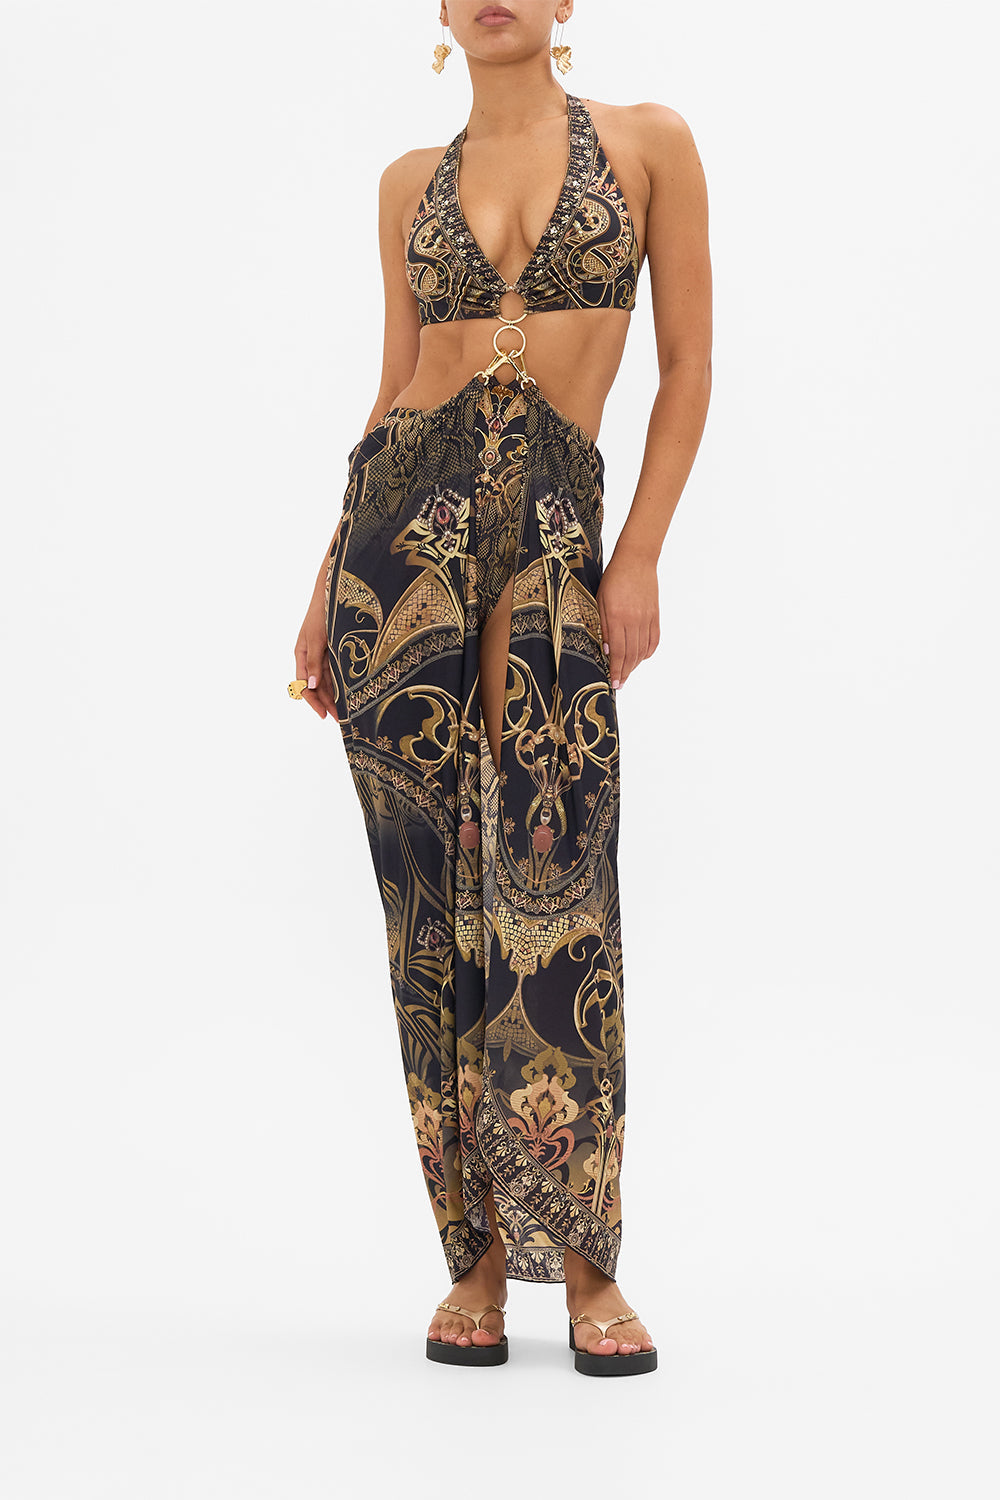 CAMILLA resortwear sarong in Nouveau Noir print